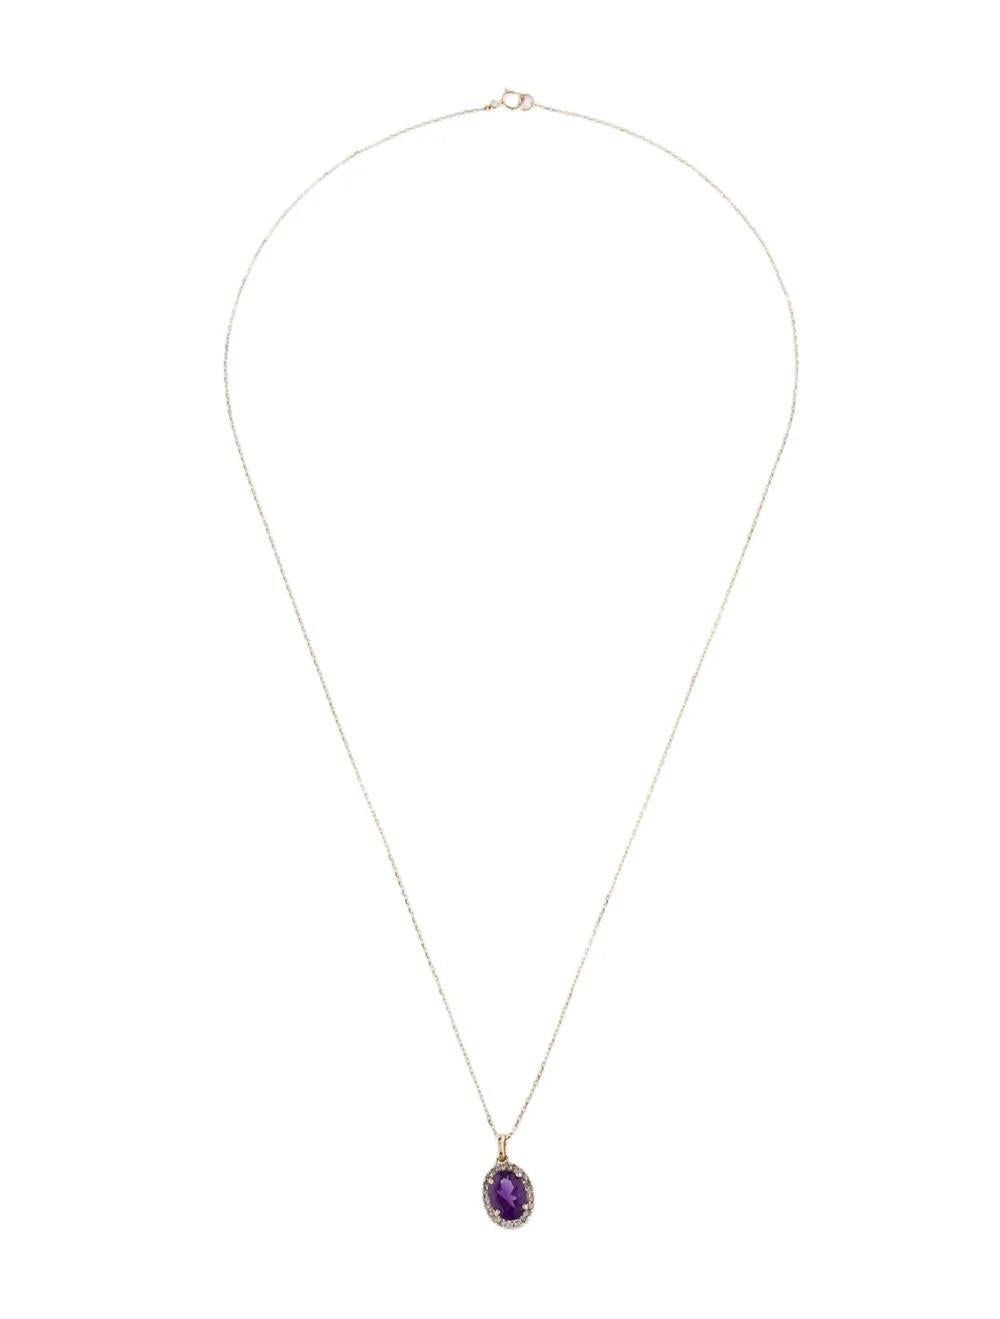 Oval Cut 14K Amethyst Diamond Pendant Necklace - Vintage Style Jewelry, Statement Piece For Sale